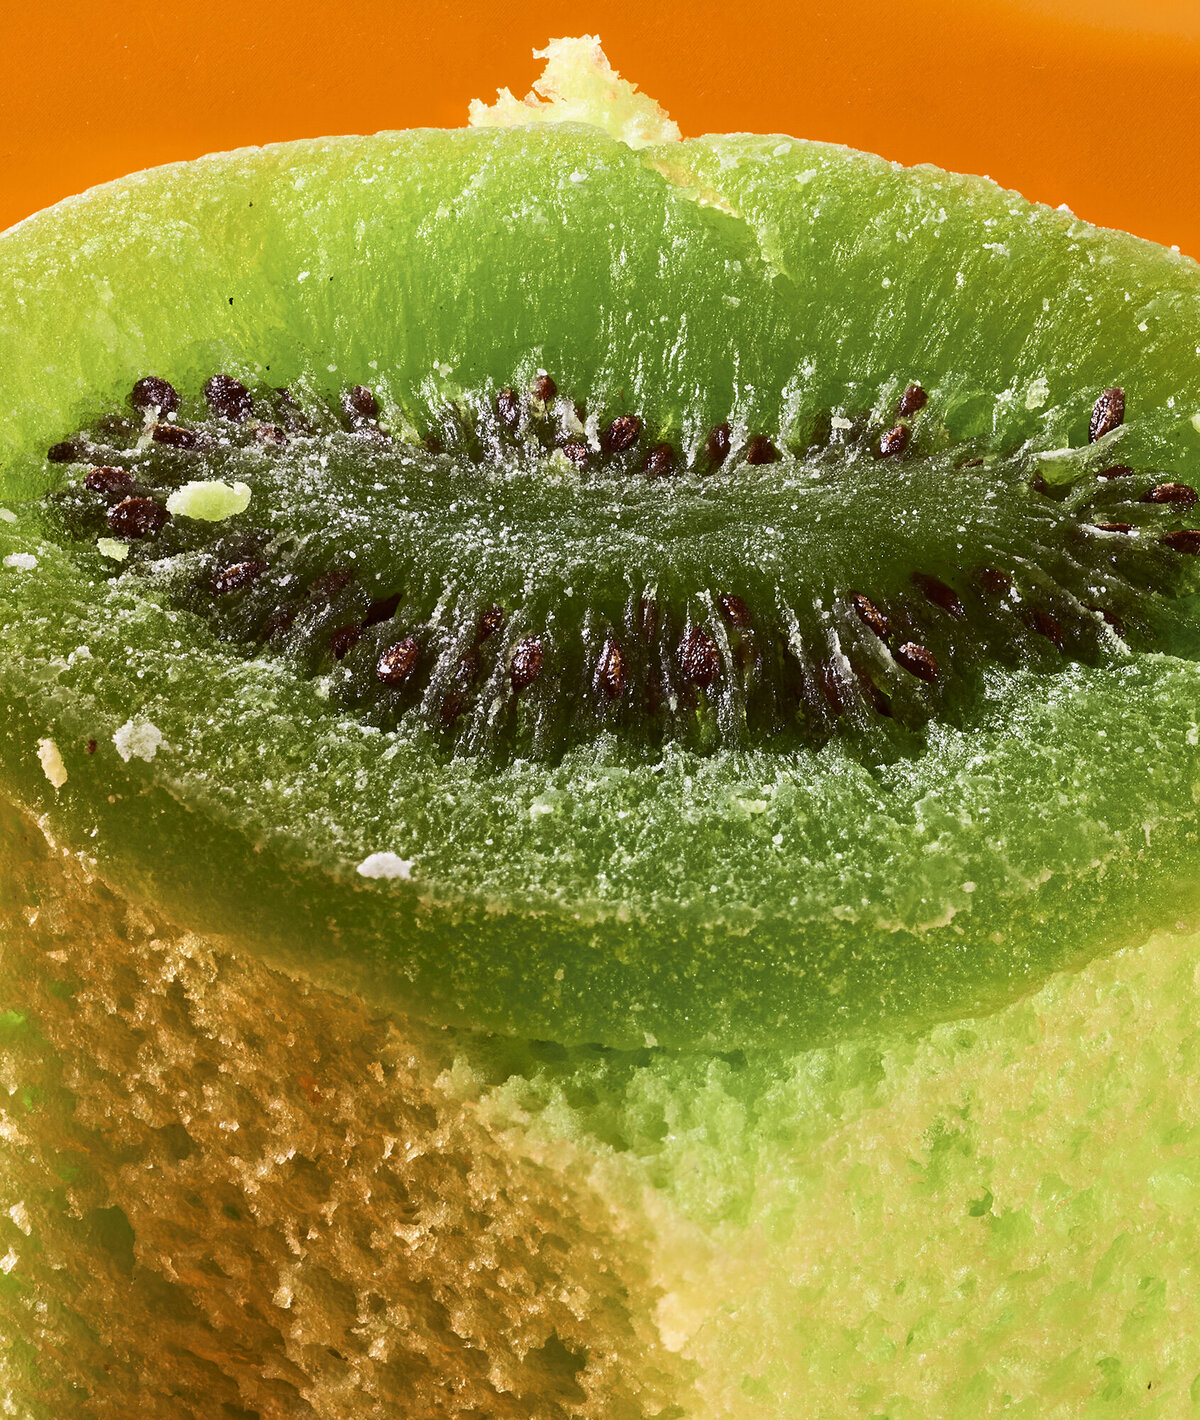 macro shot of dried fruit on cake